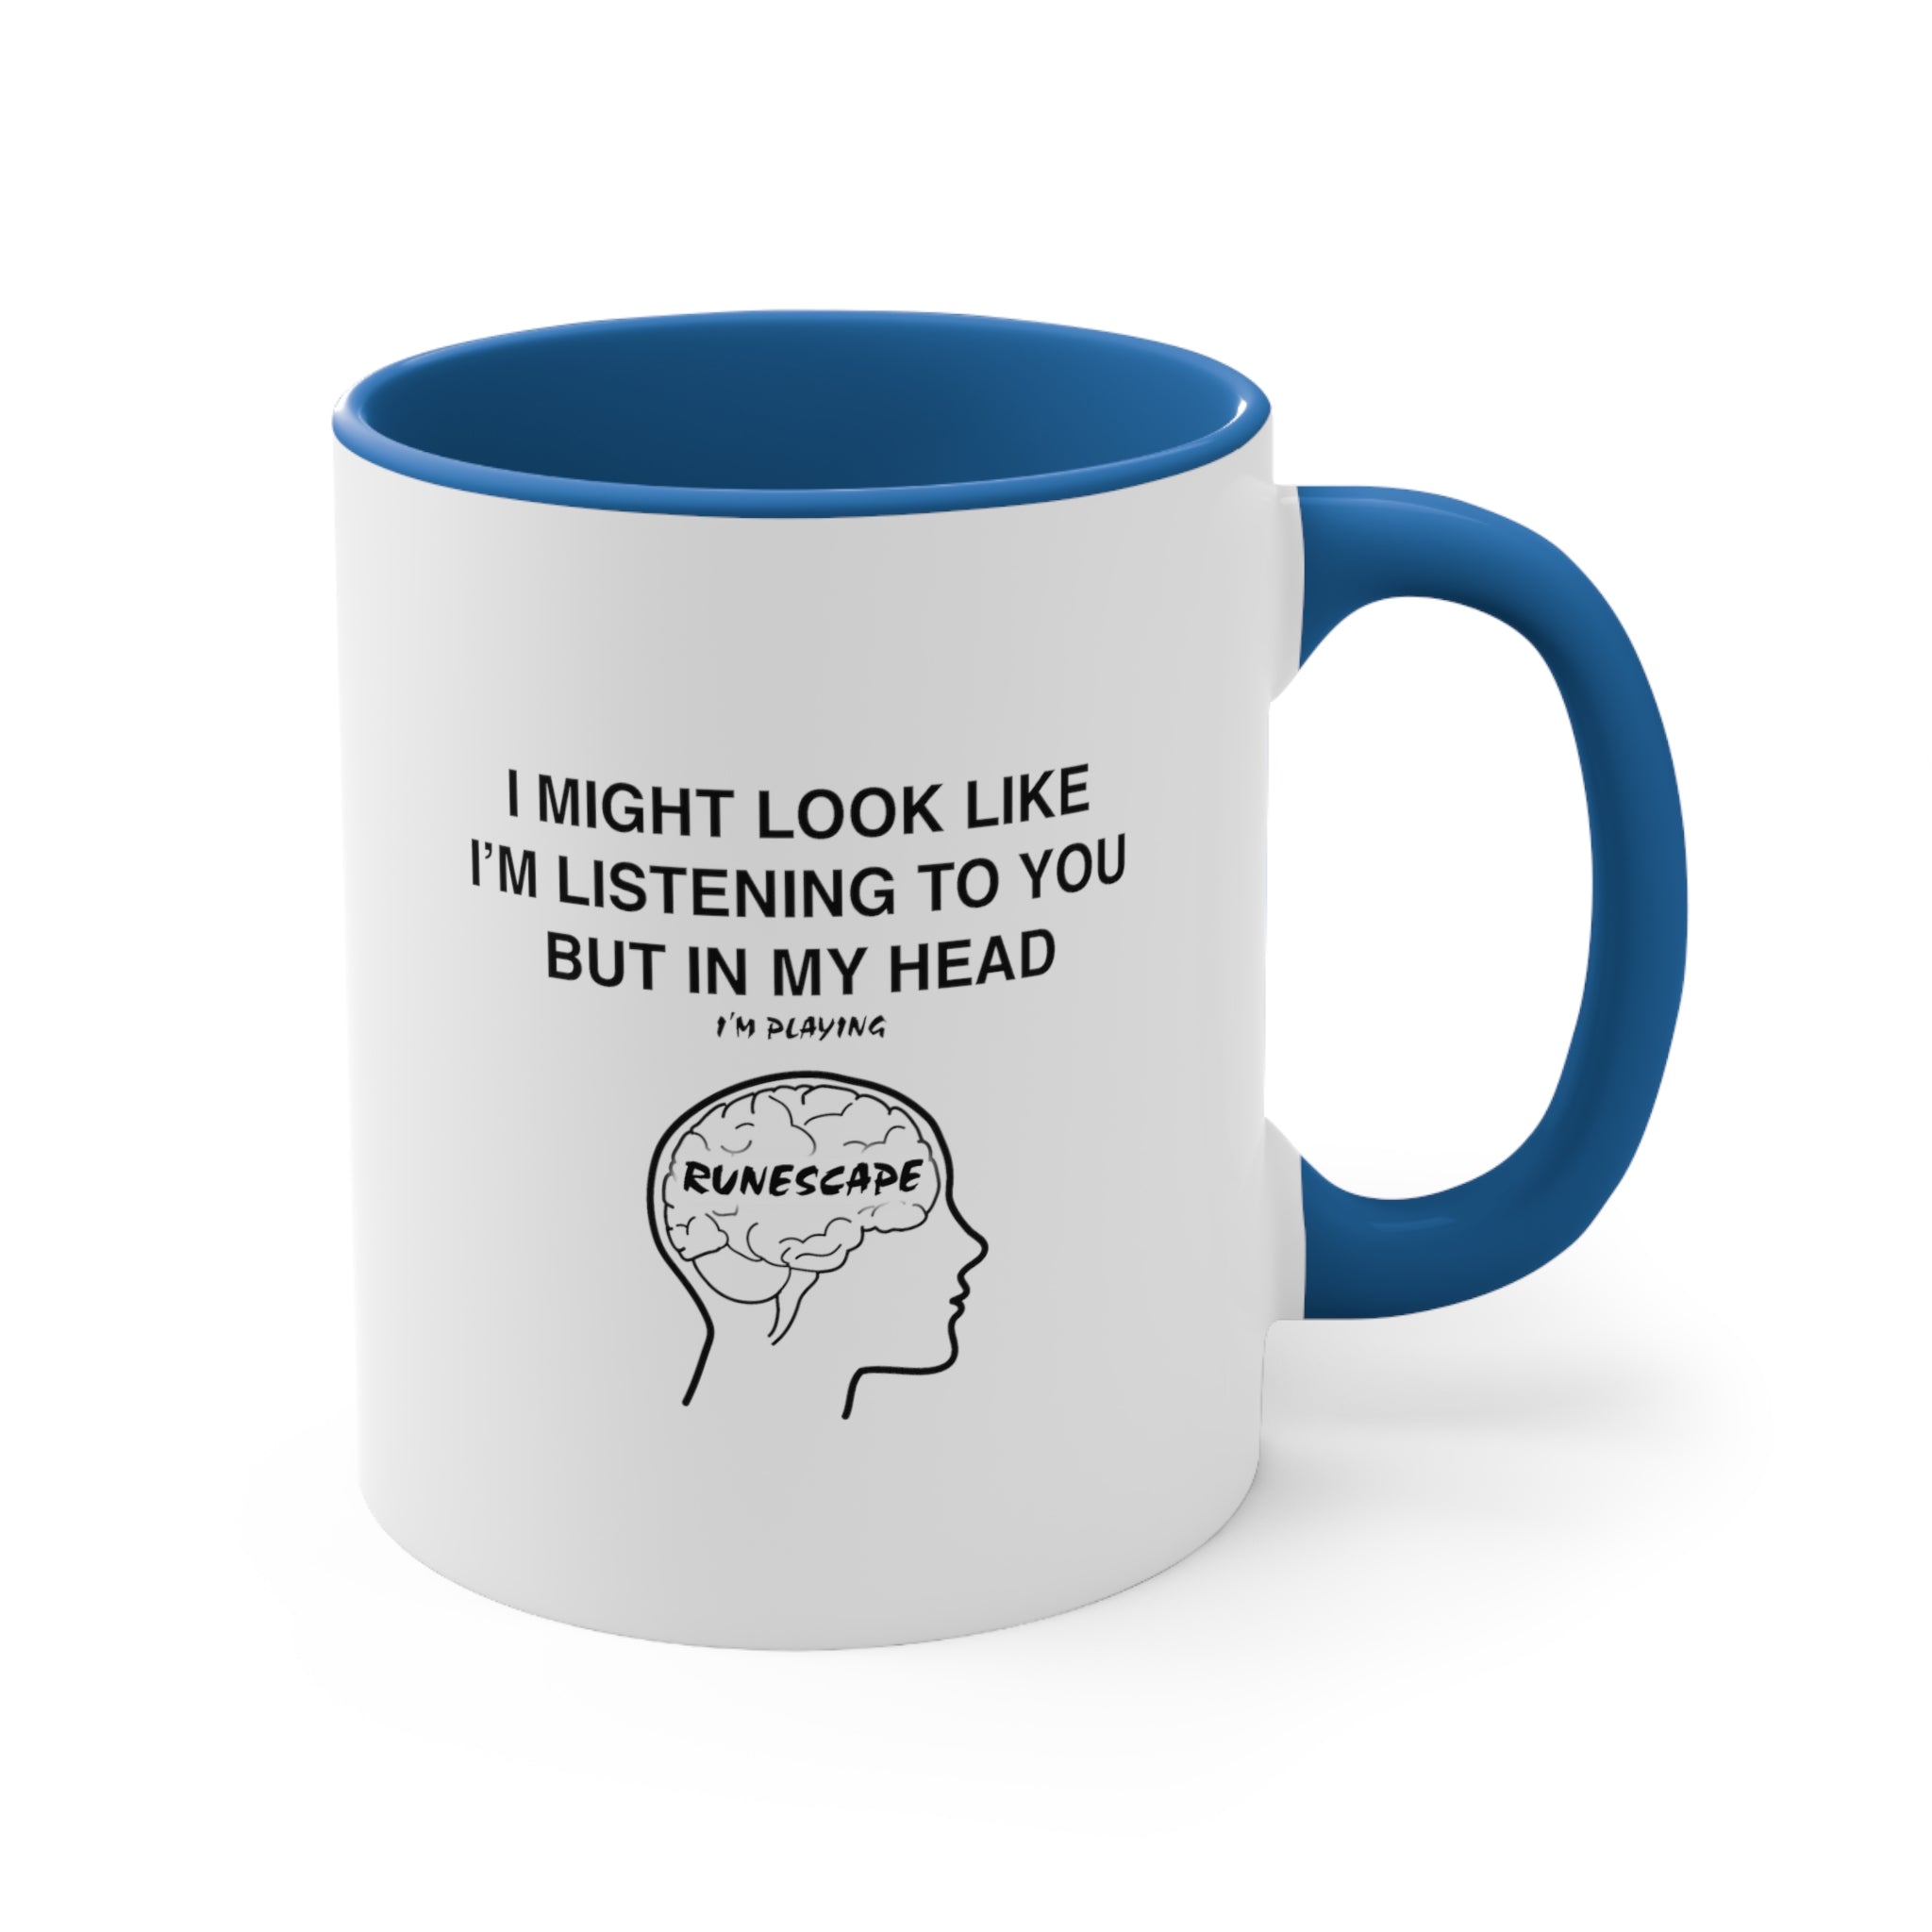 Runescape Funny Coffee Mug, 11oz I Might Look Like I'm Listening Joke Humour Humor Birthday Christmas Valentine's Gift Cup